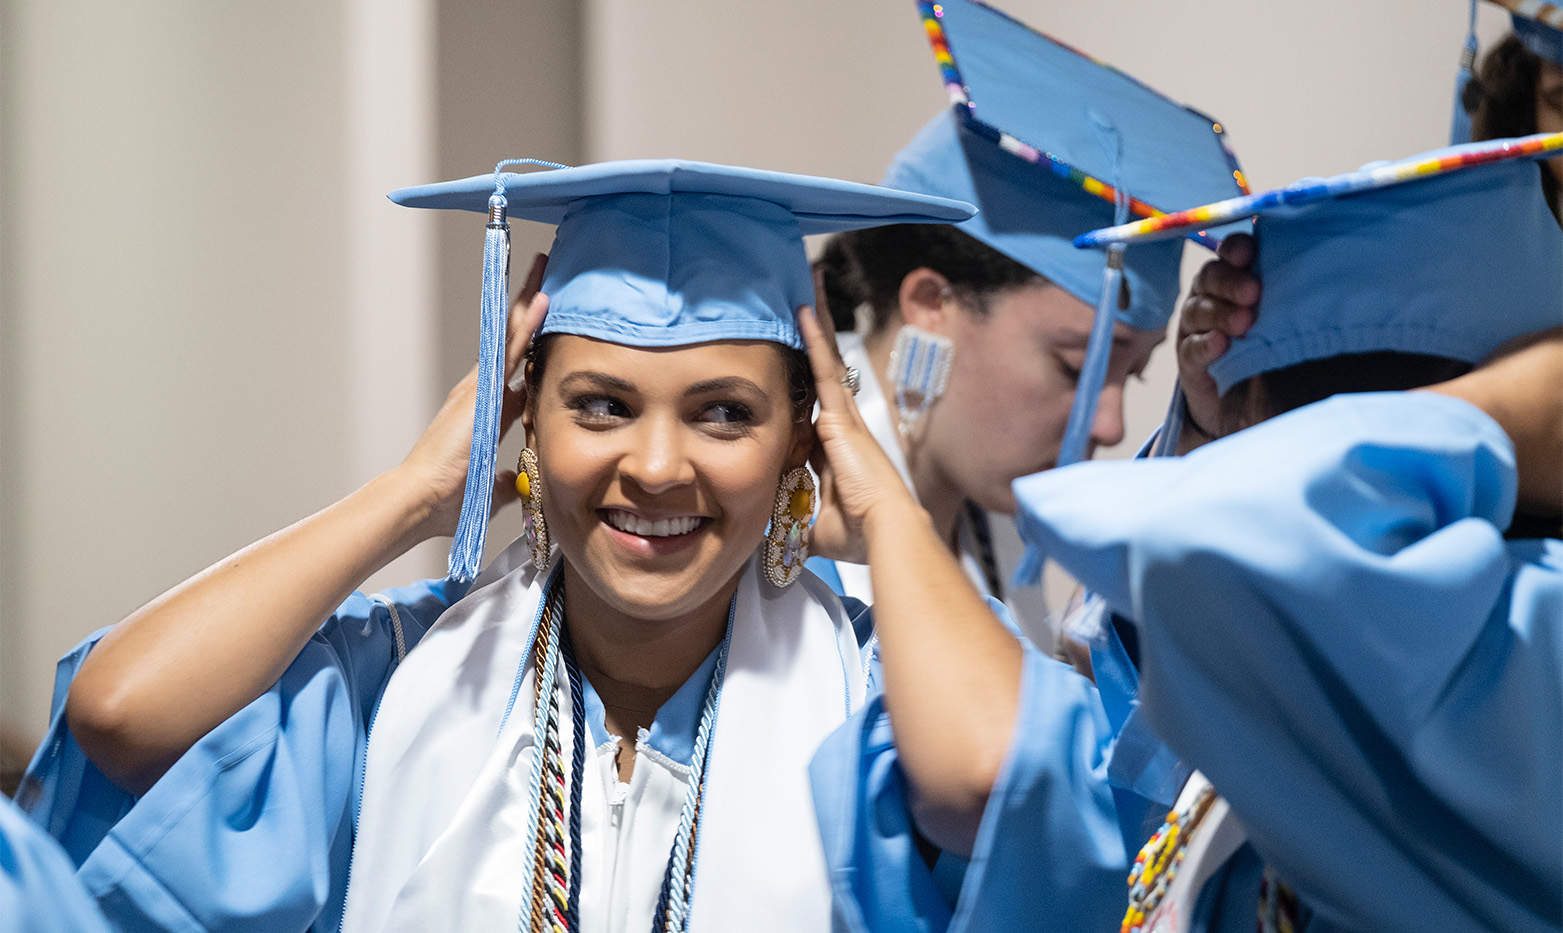 A graduate adjusting their graduation cap.